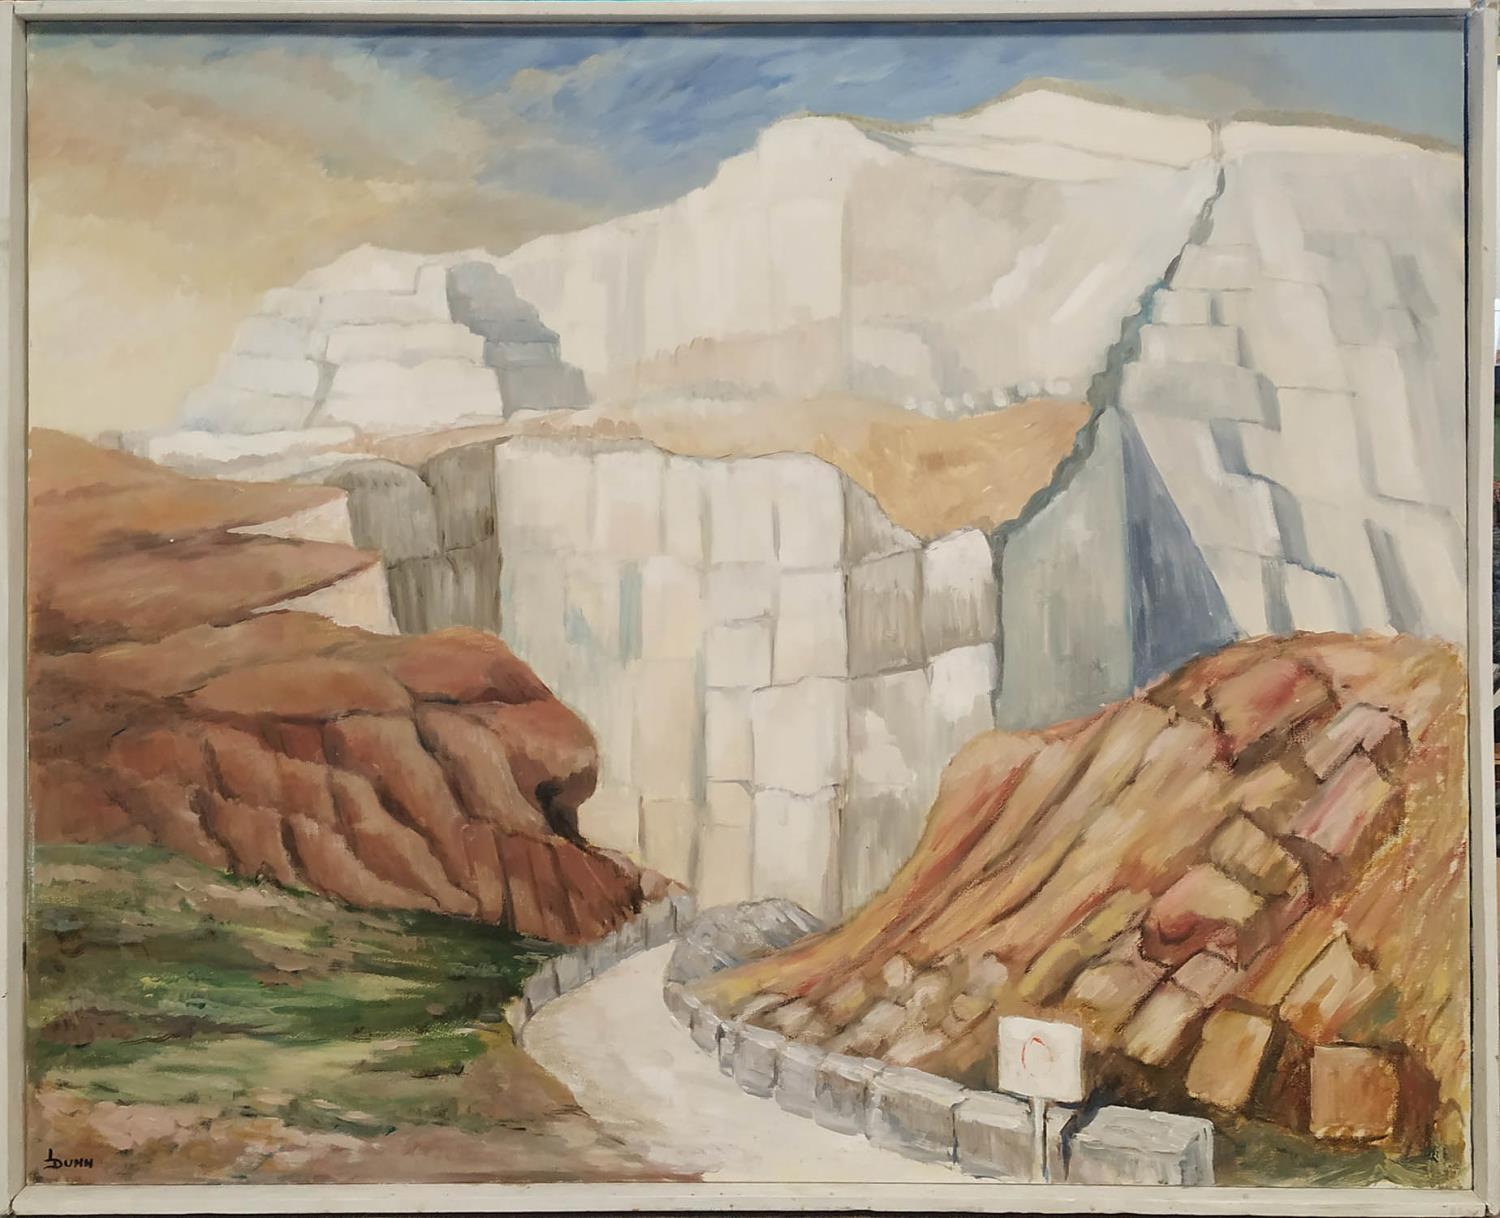 LORNA DUNN (1920-2016), 'Monte coto crema marfil quarry, Spain', oil on canvas, 80cm x 100cm,